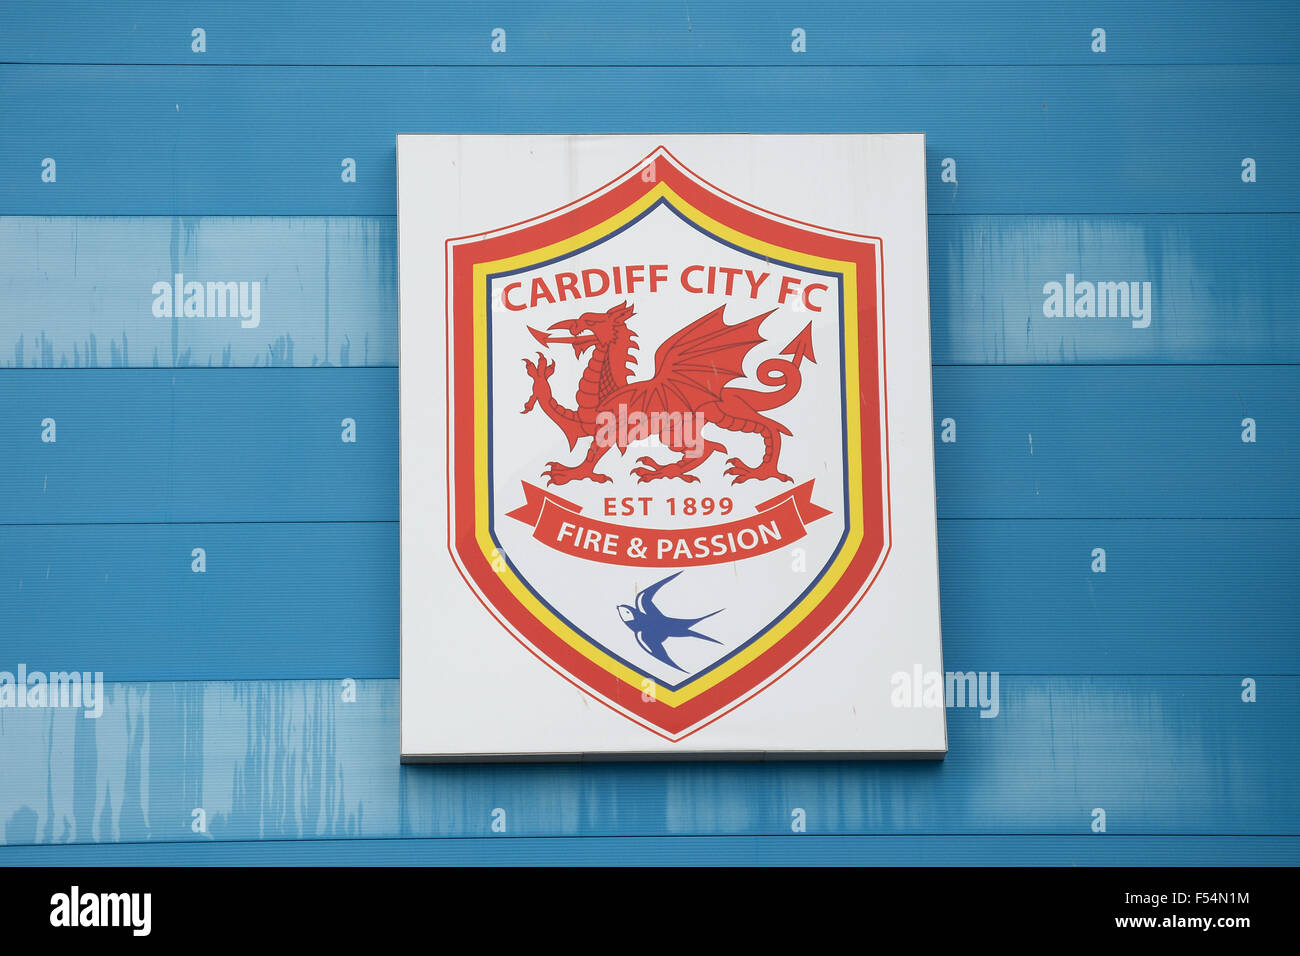 Cardiff City FC (CCFC) badge logo in Cardiff City Stadium di Cardiff, Galles. Foto Stock